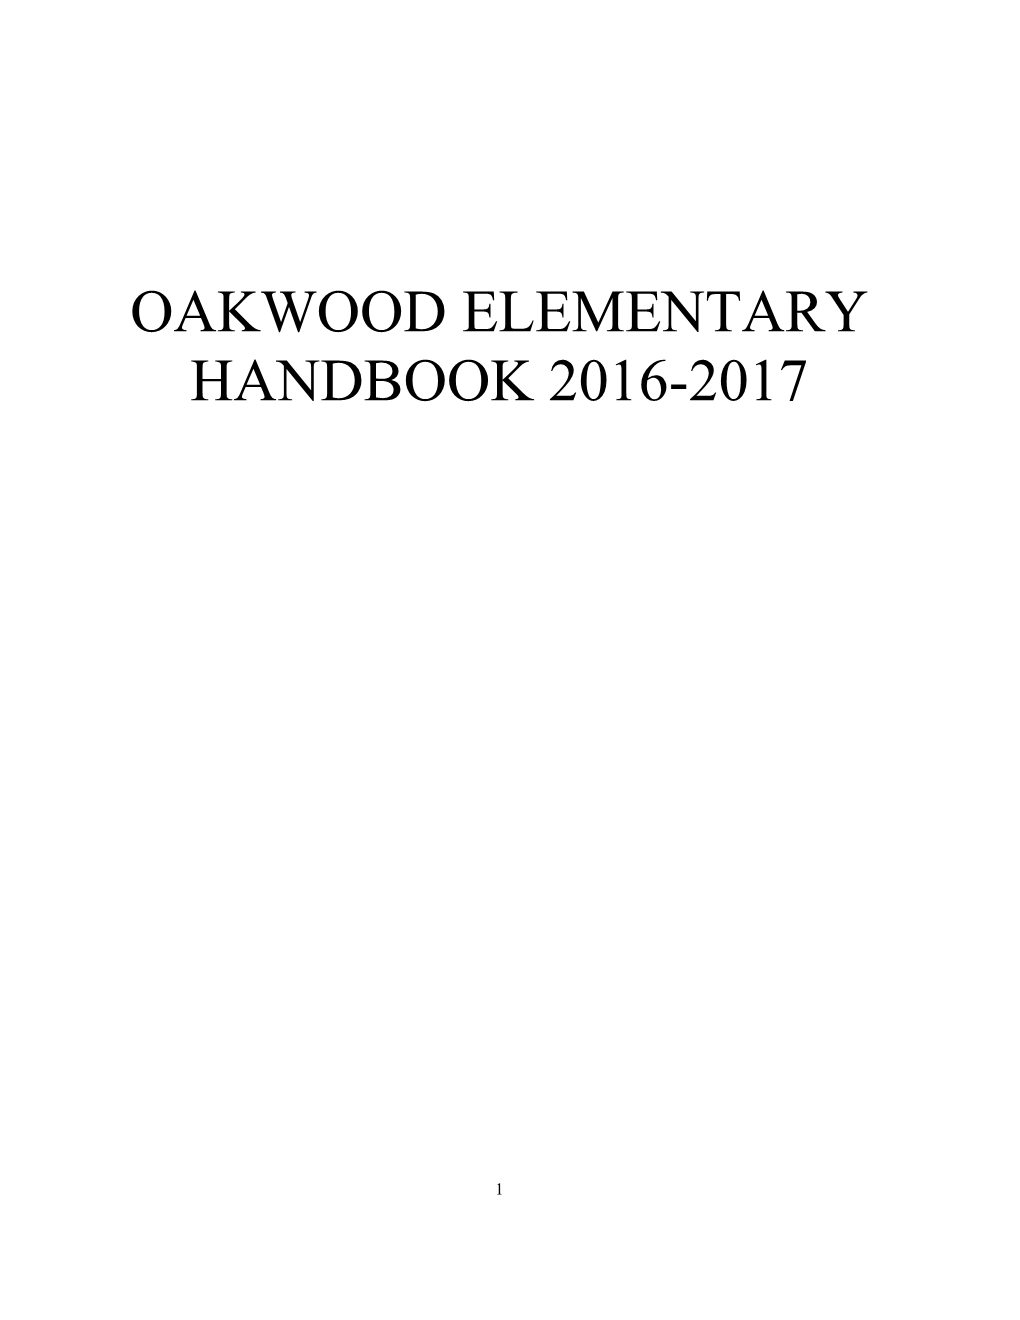 Oakwood Elementary Handbook 2016-2017